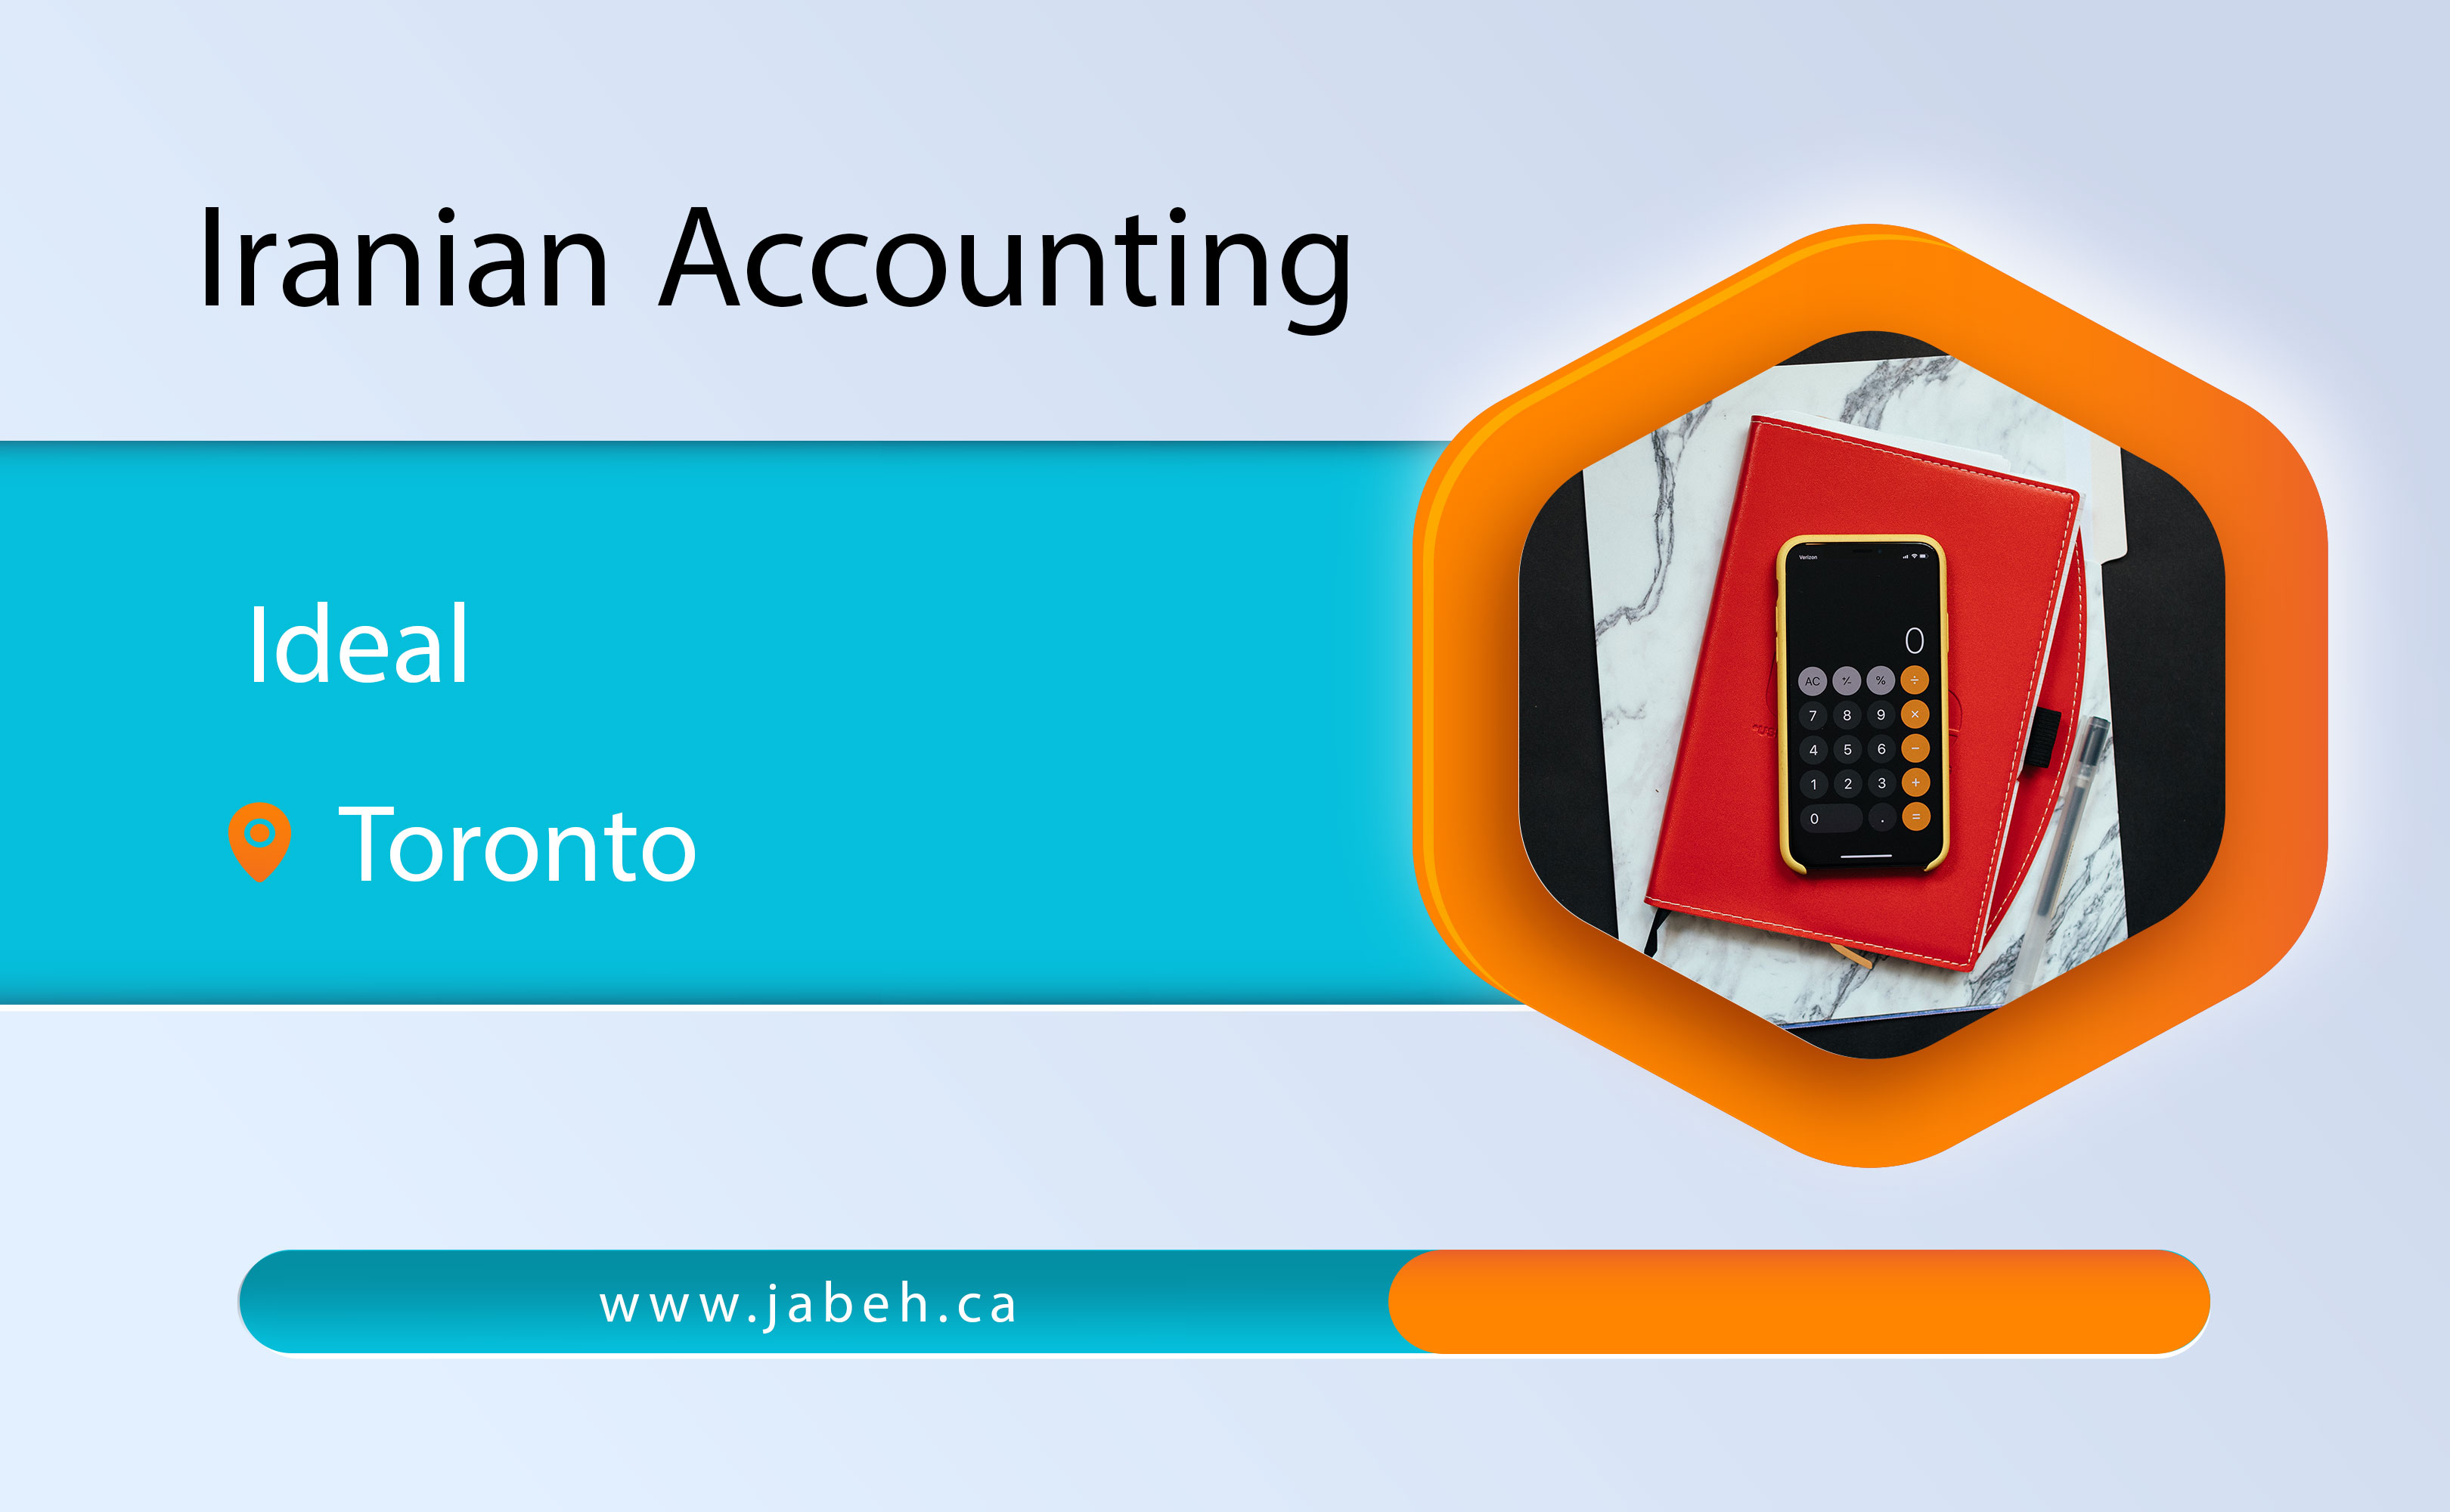 Ideal Iranian accounting company in Toronto